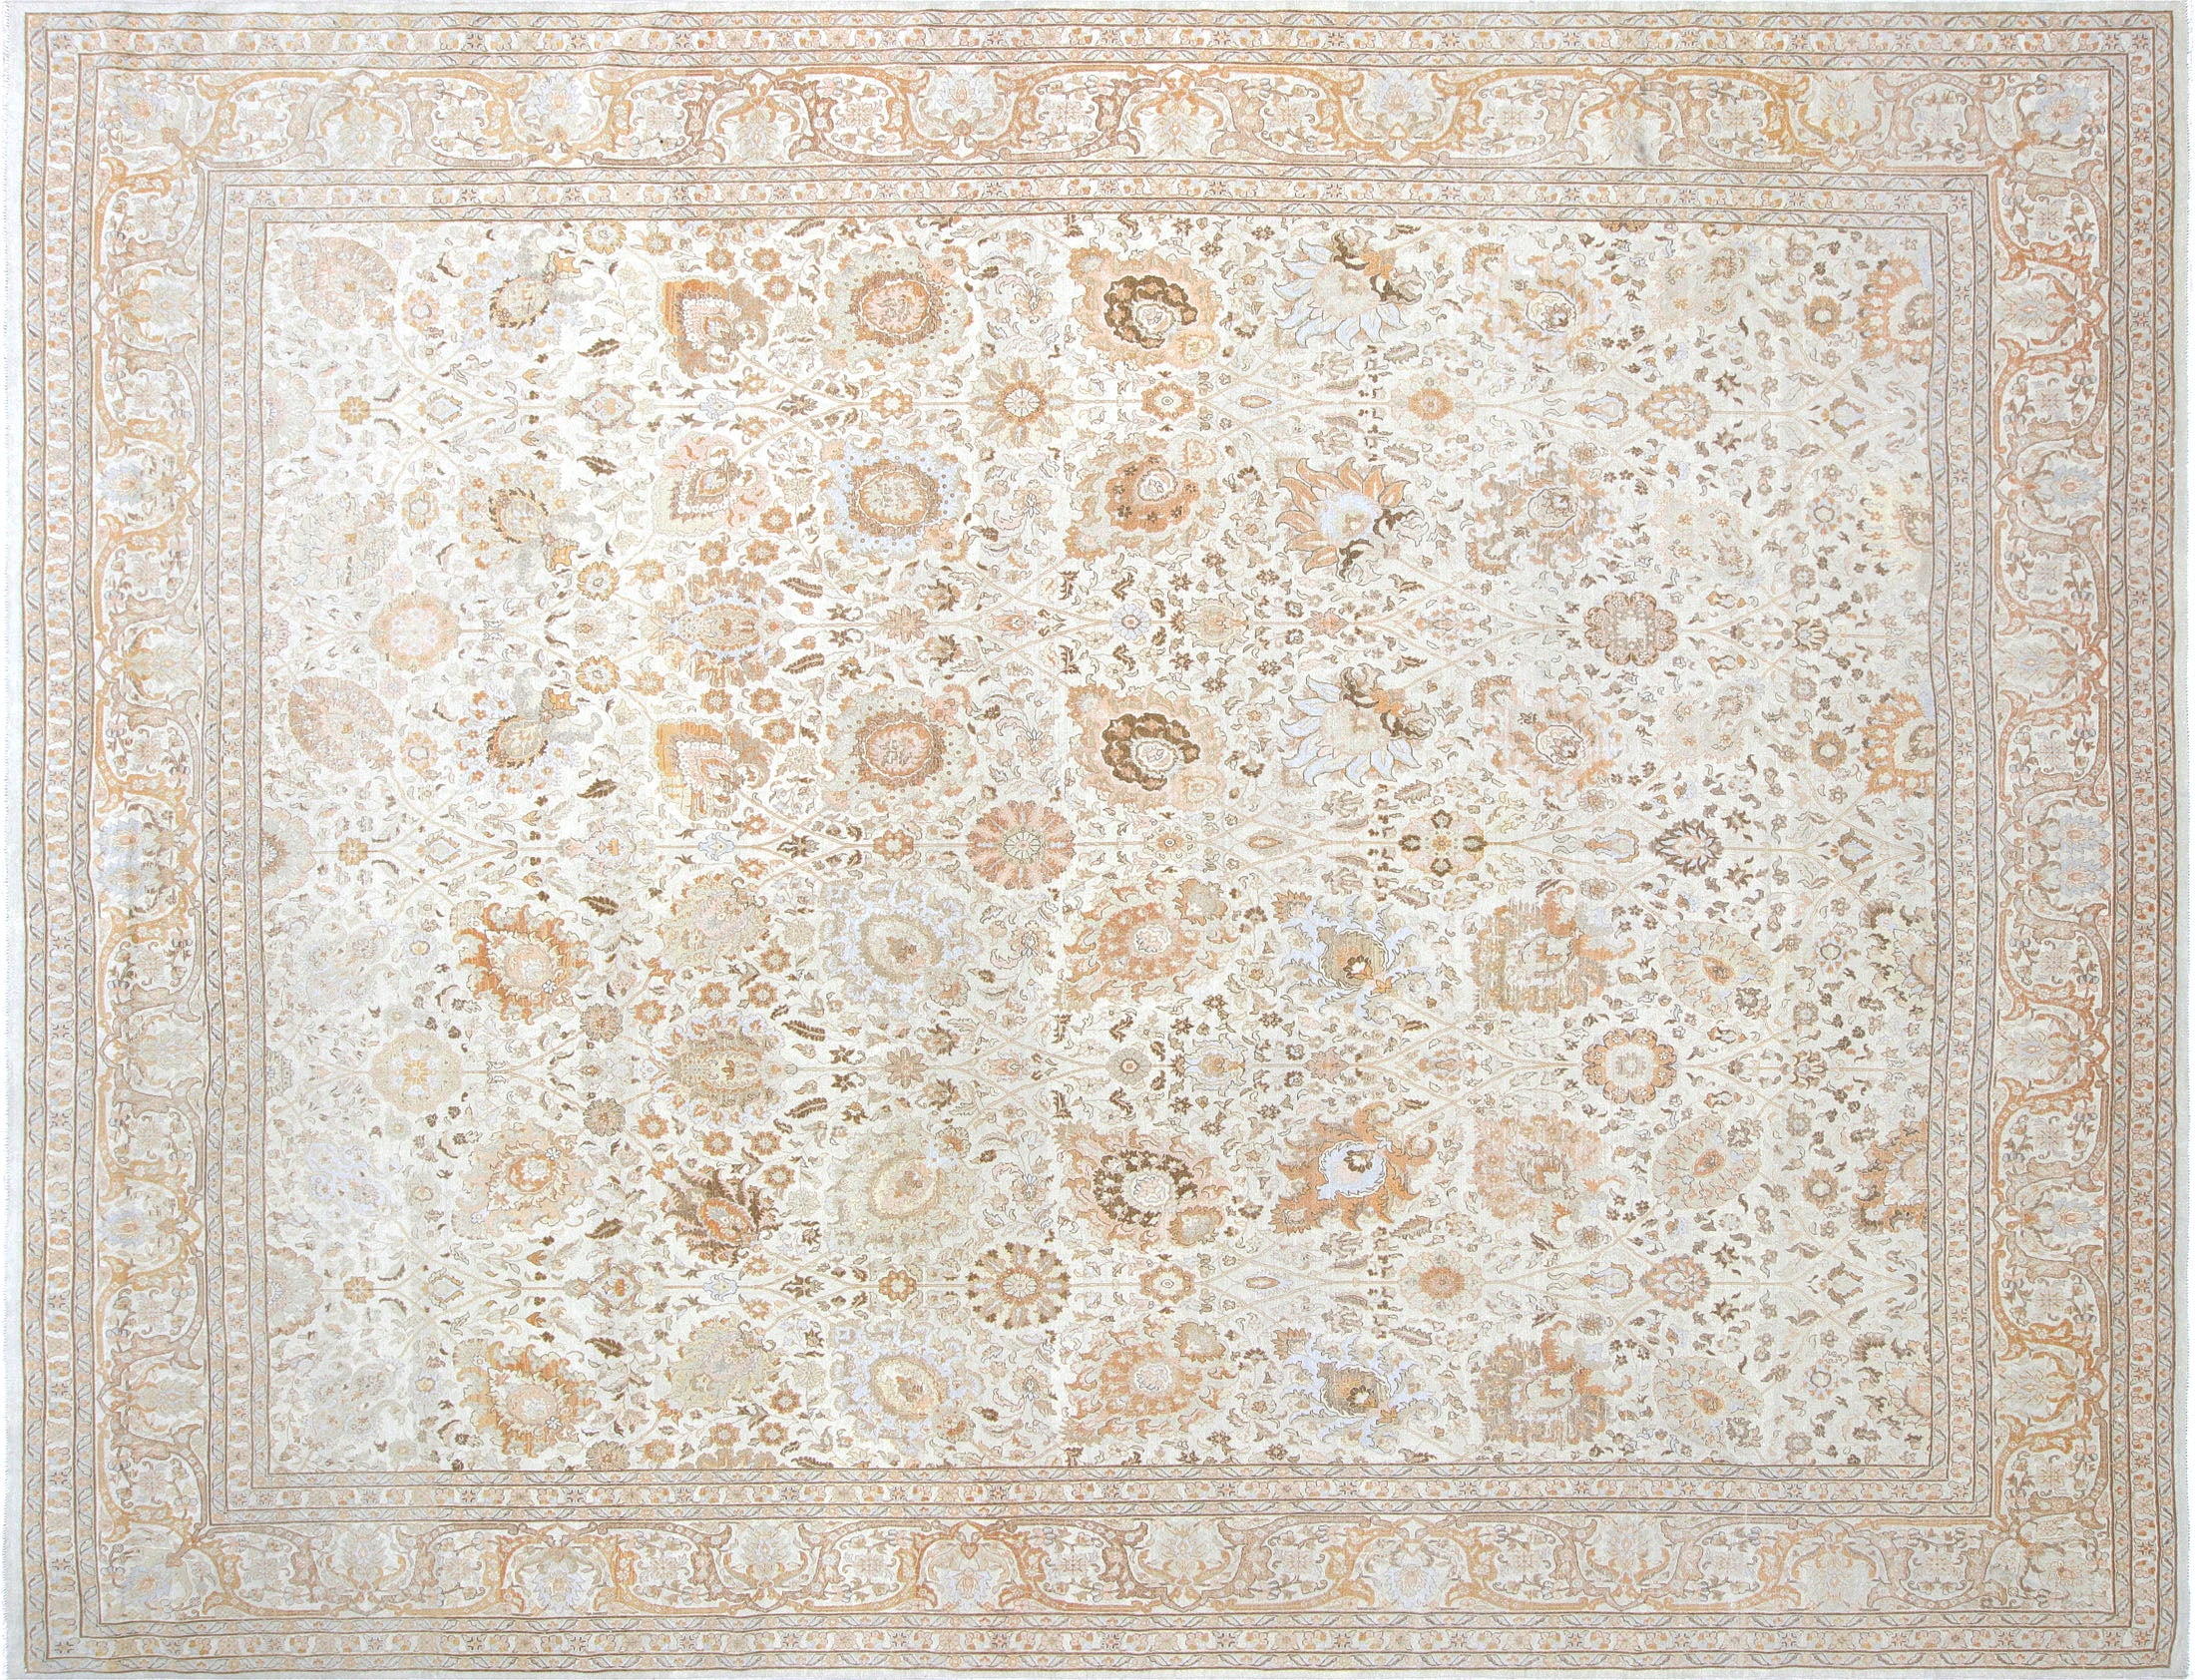 Vintage Persian Tabriz Carpet - 11'9" x 15'4"